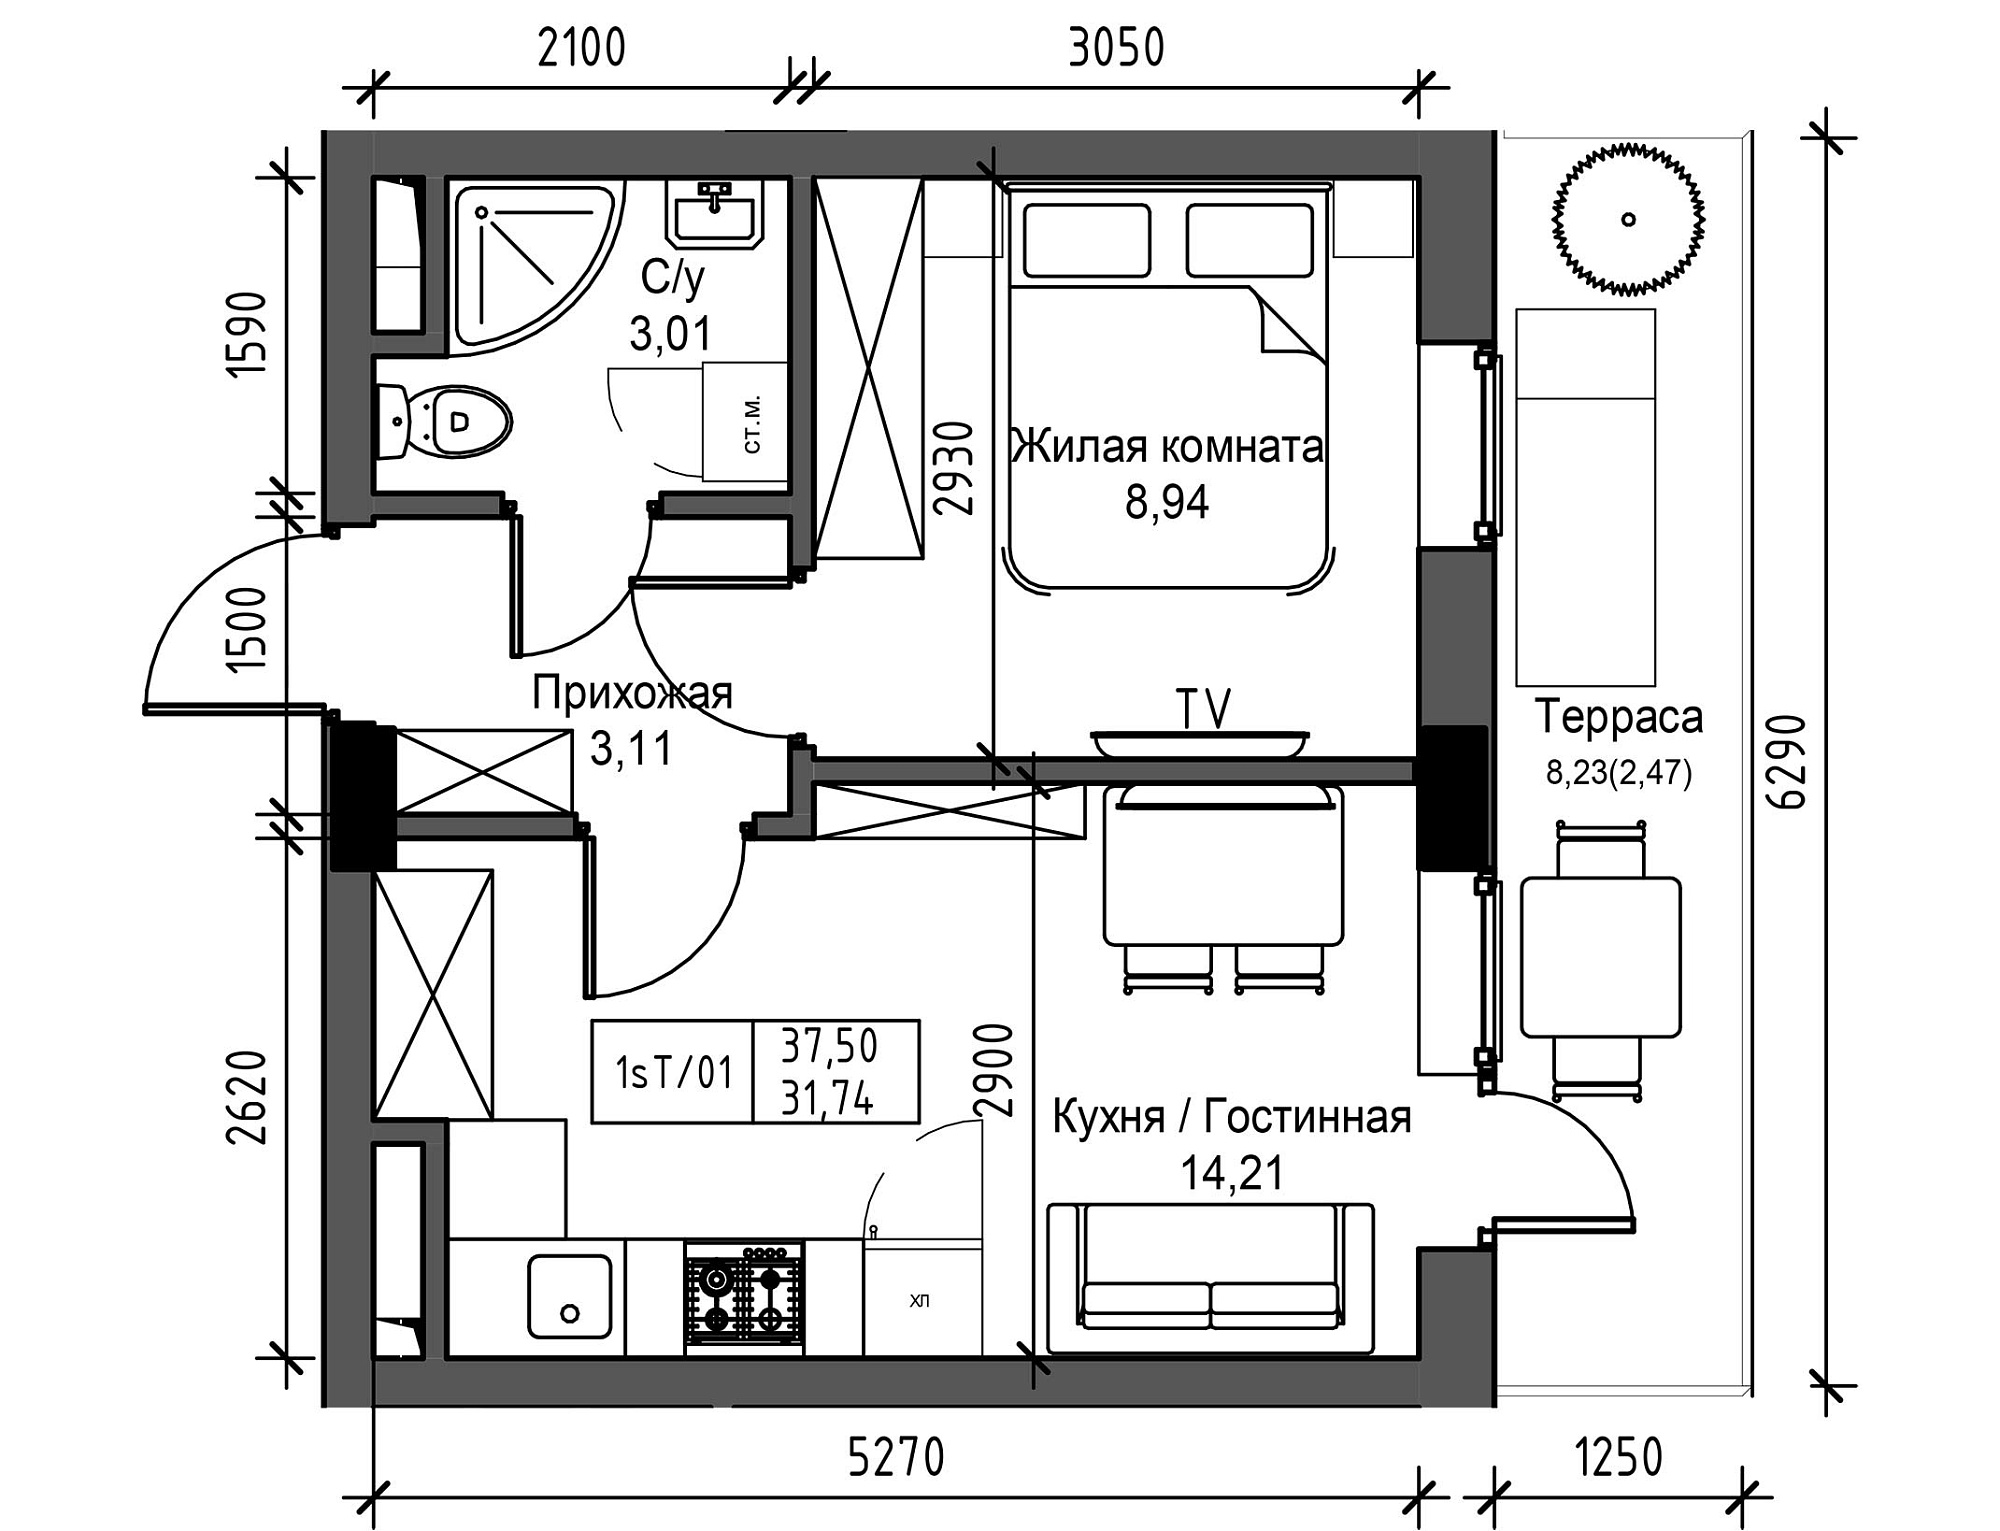 Planning 1-rm flats area 31.74m2, UM-003-05/0039.